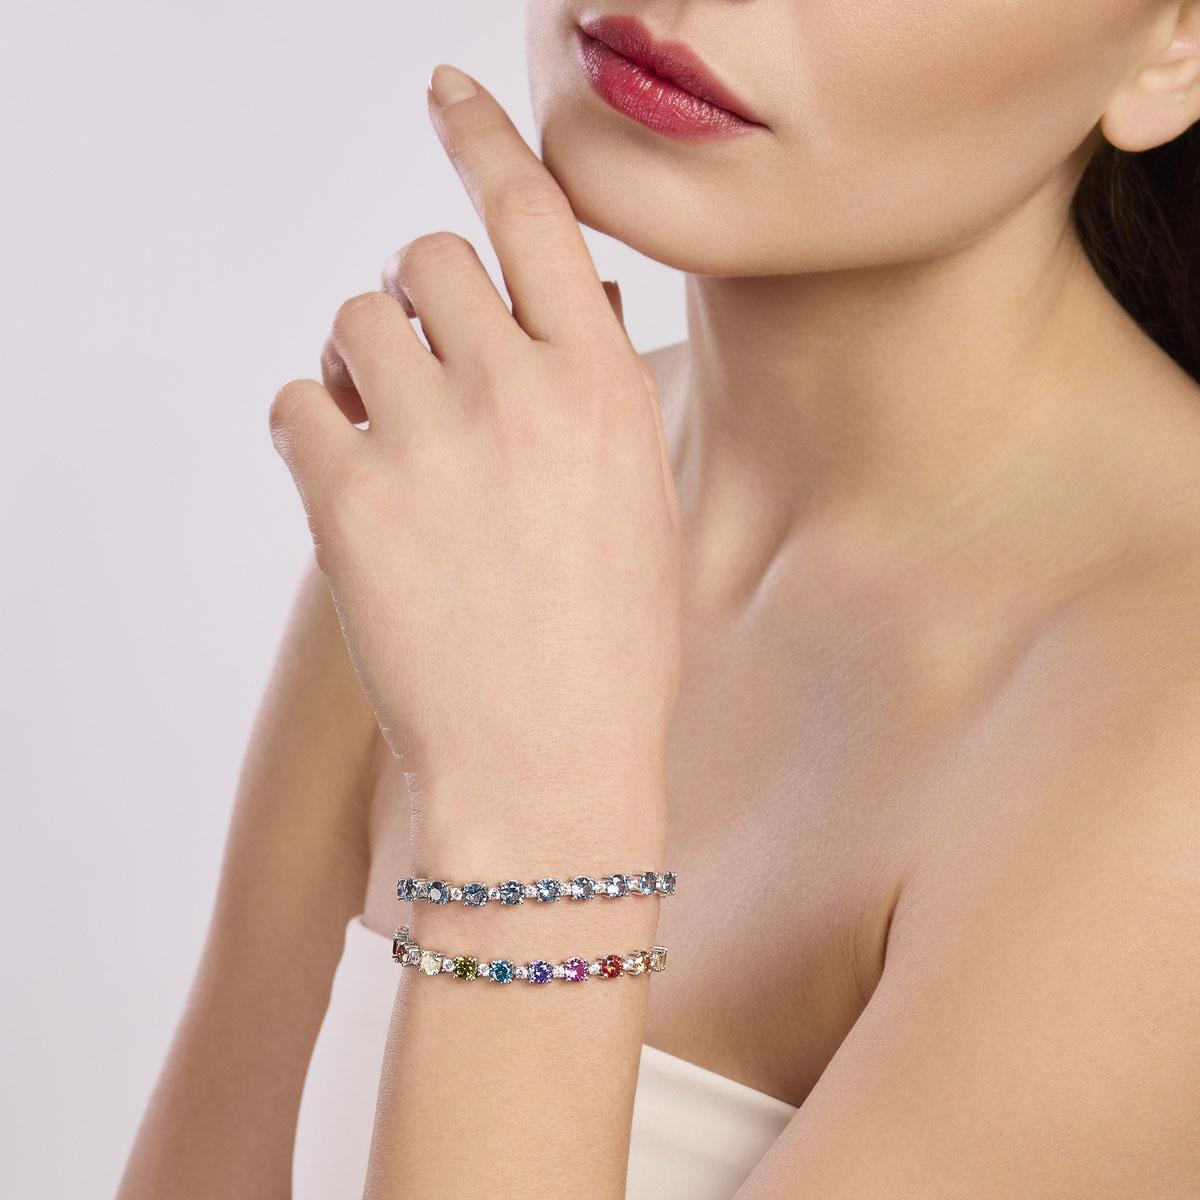 Mabina Femme - Bracelet CHAPEAU multicolore - 533905